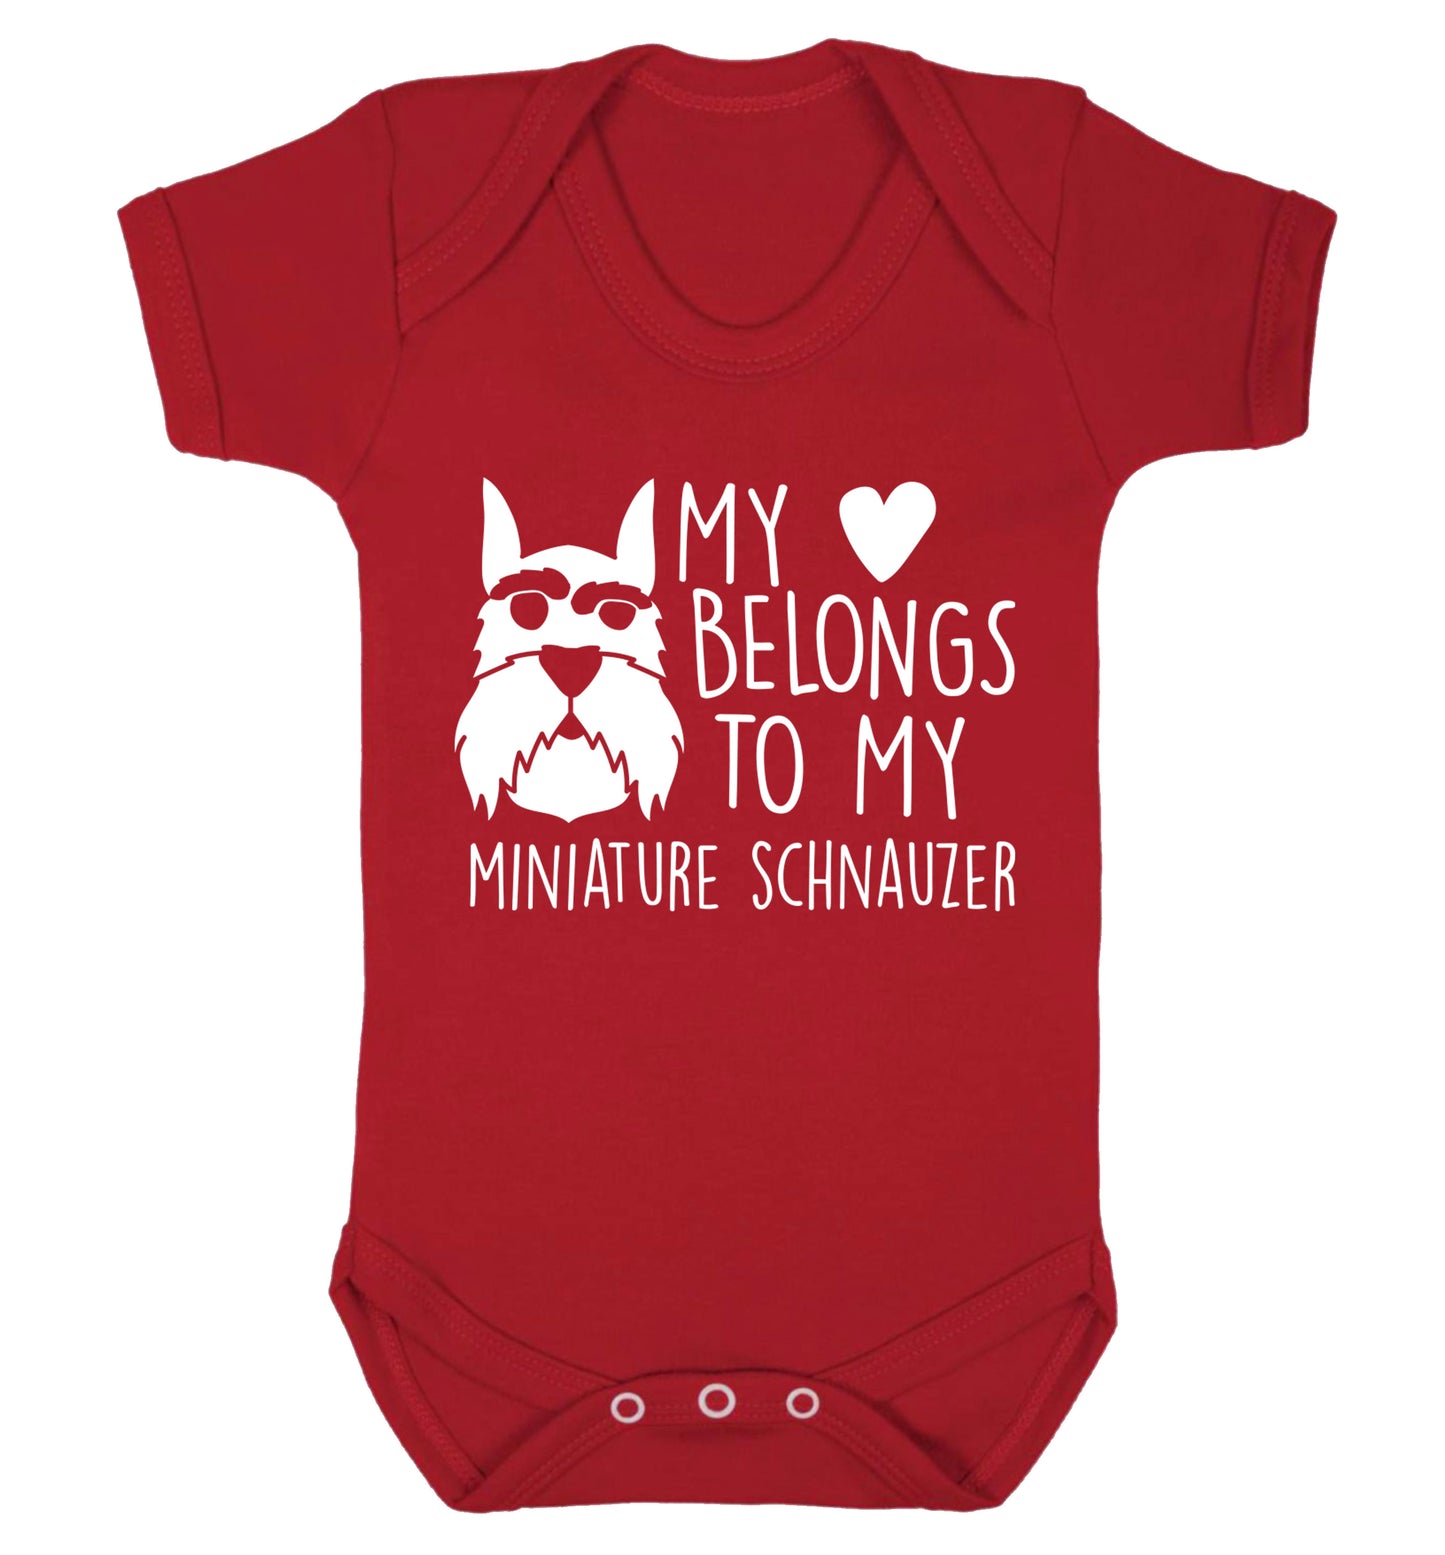 My heart belongs to my miniature schnauzer Baby Vest red 18-24 months